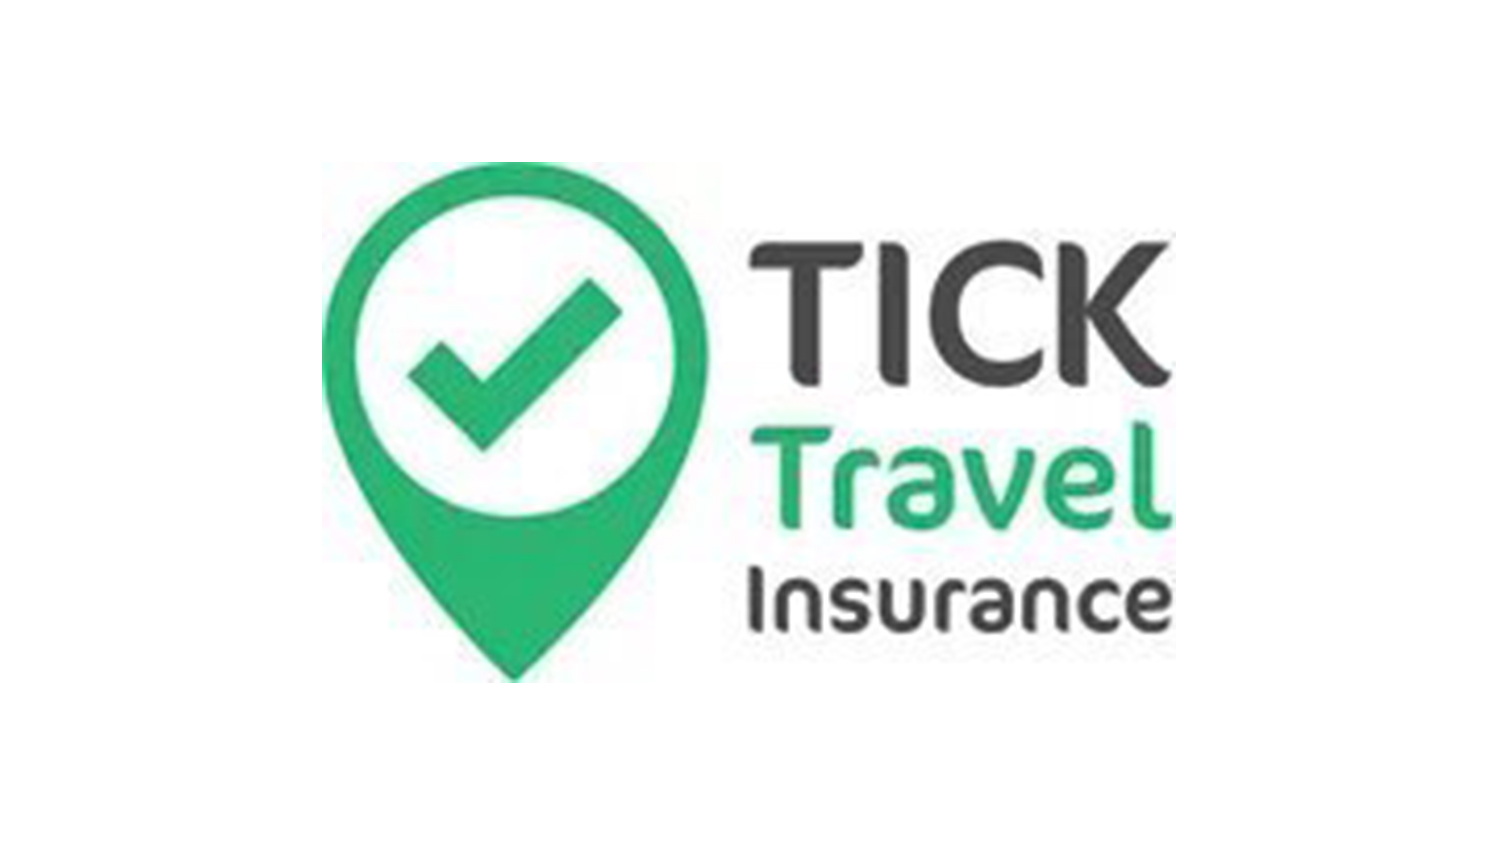 Tick Travel Insurance Top carousel image